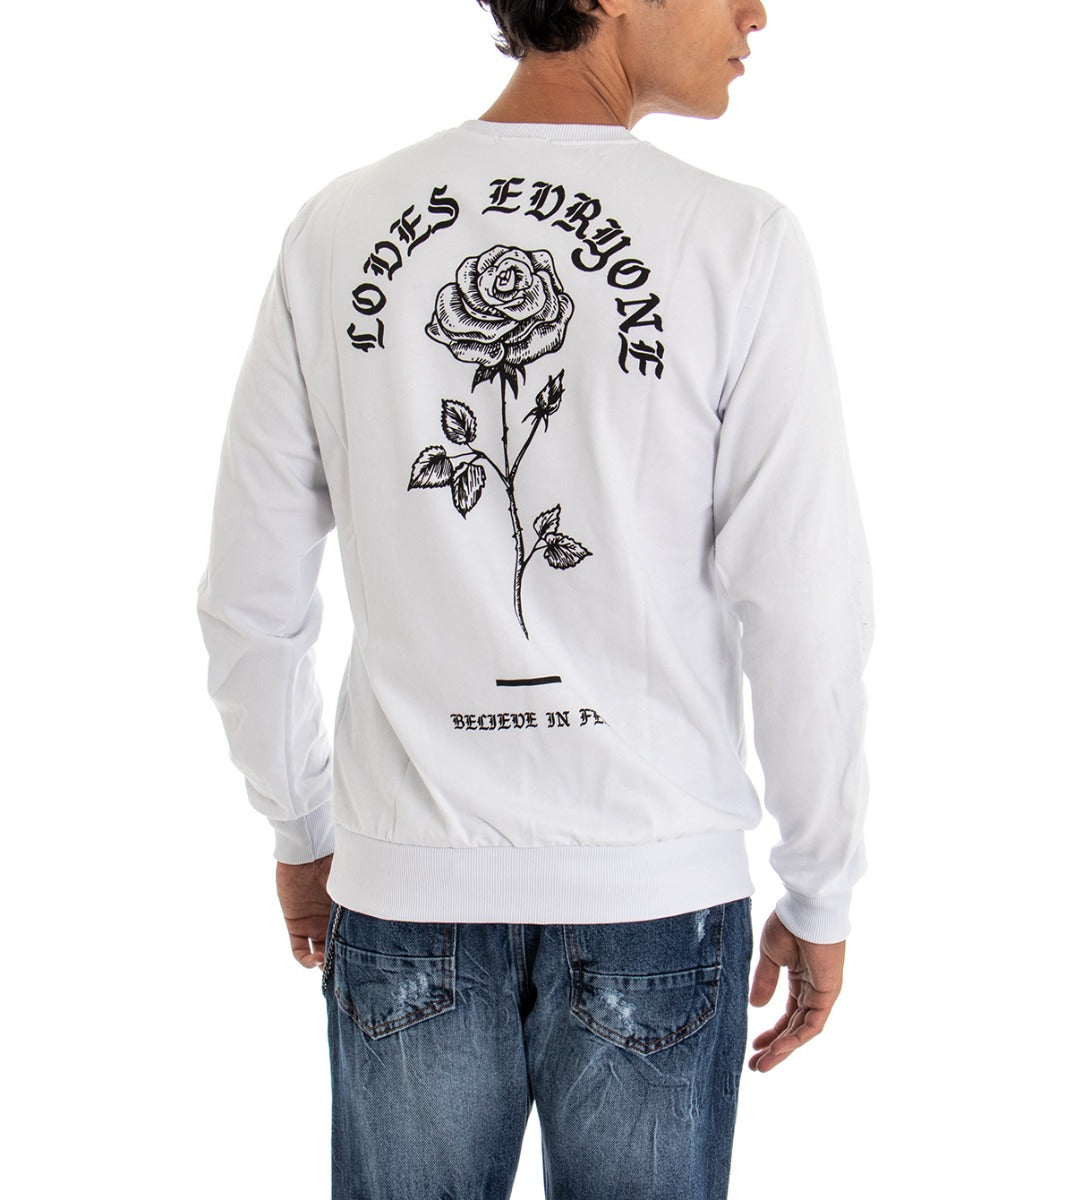 Men's Crewneck Sweatshirt White Regular Fit Pink Print GIOSAL-F2619A